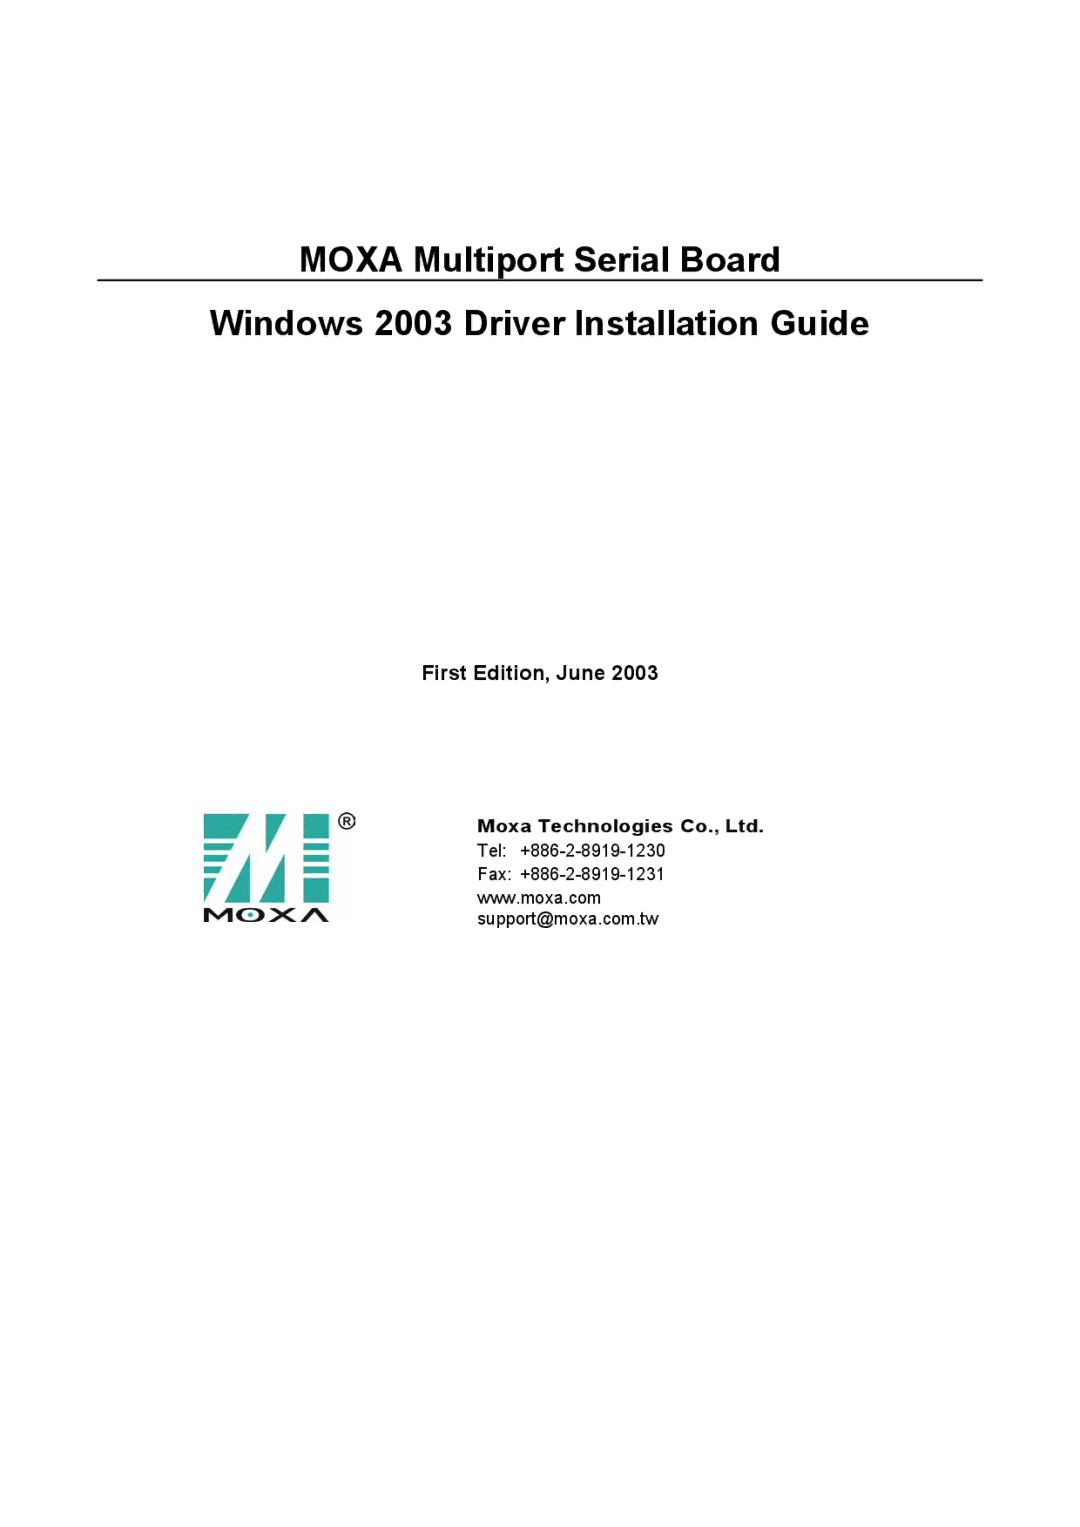 Moxa Technologies Windows 2003 Driver manual First Edition, June 